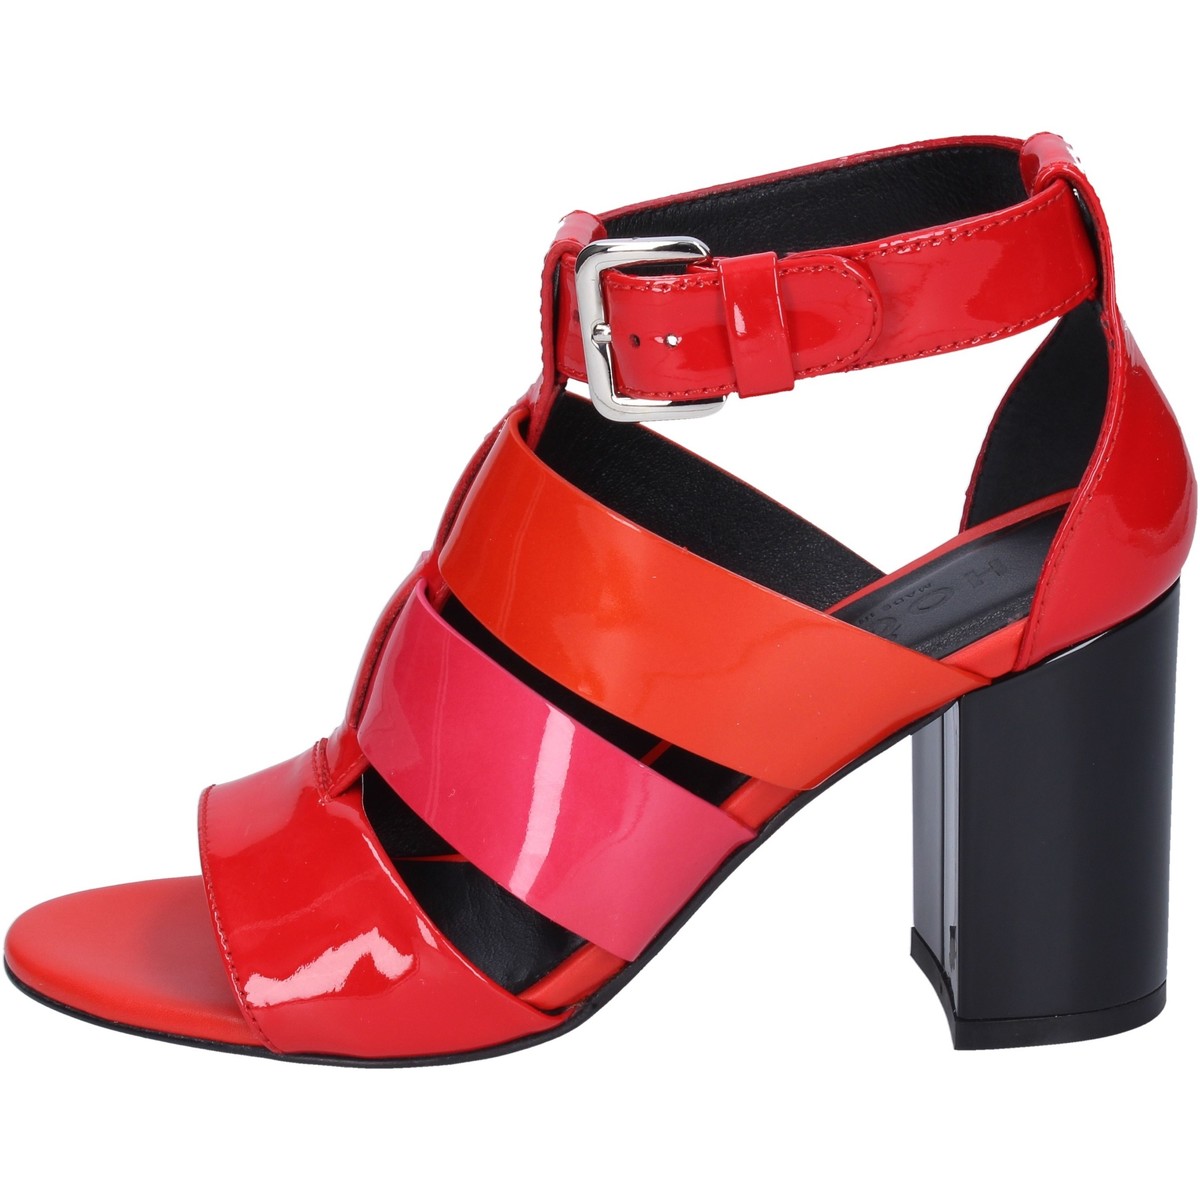 Chaussures Femme en 4 jours garantis BK646 Rouge